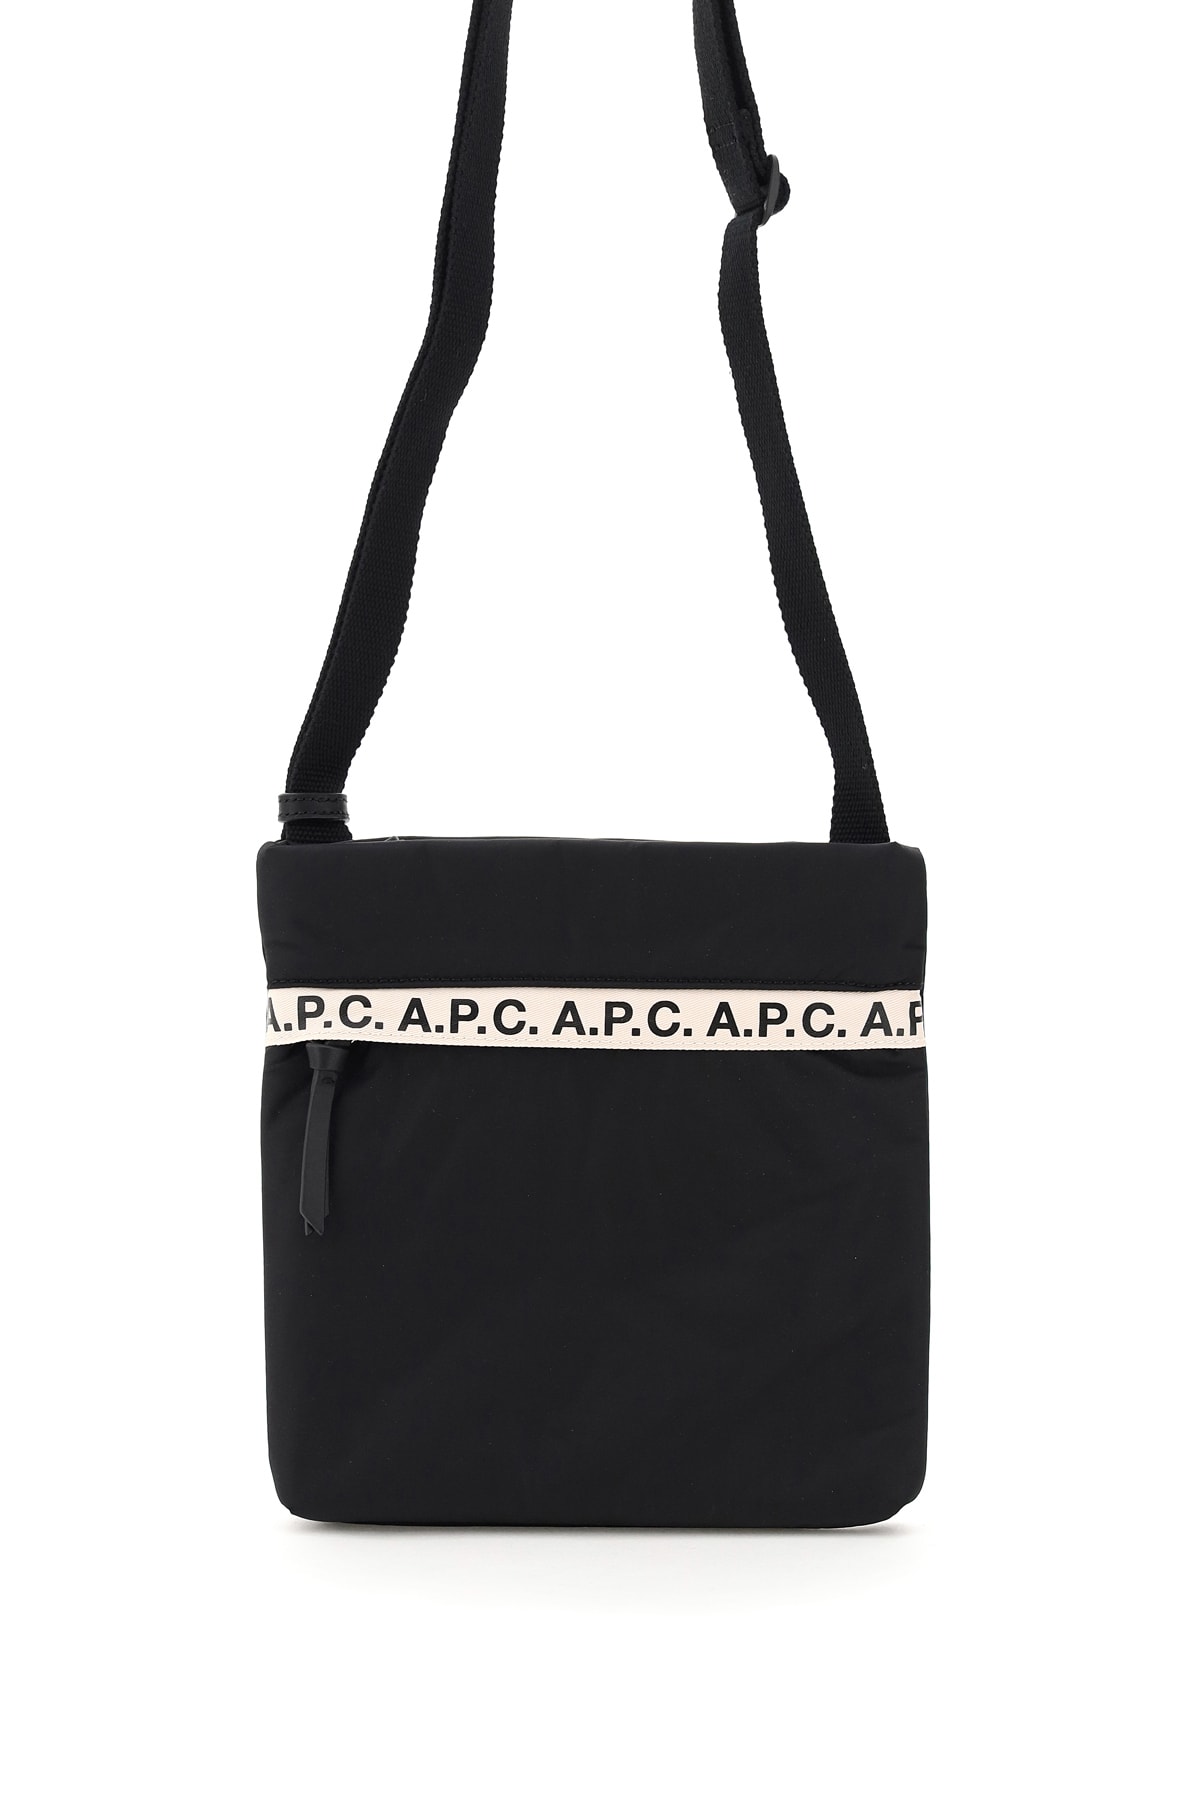 A.P.C. Sacoche Repeat Logo Bag